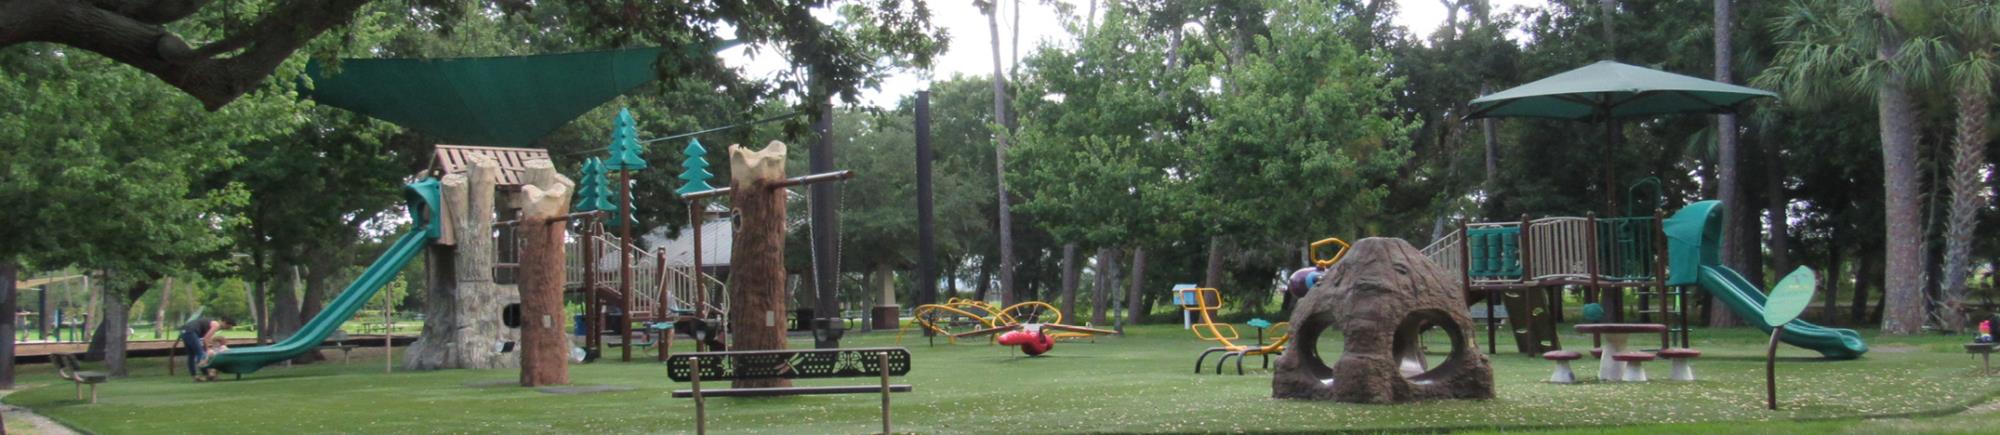 Weaver-Park-Playground-Banner.jpg